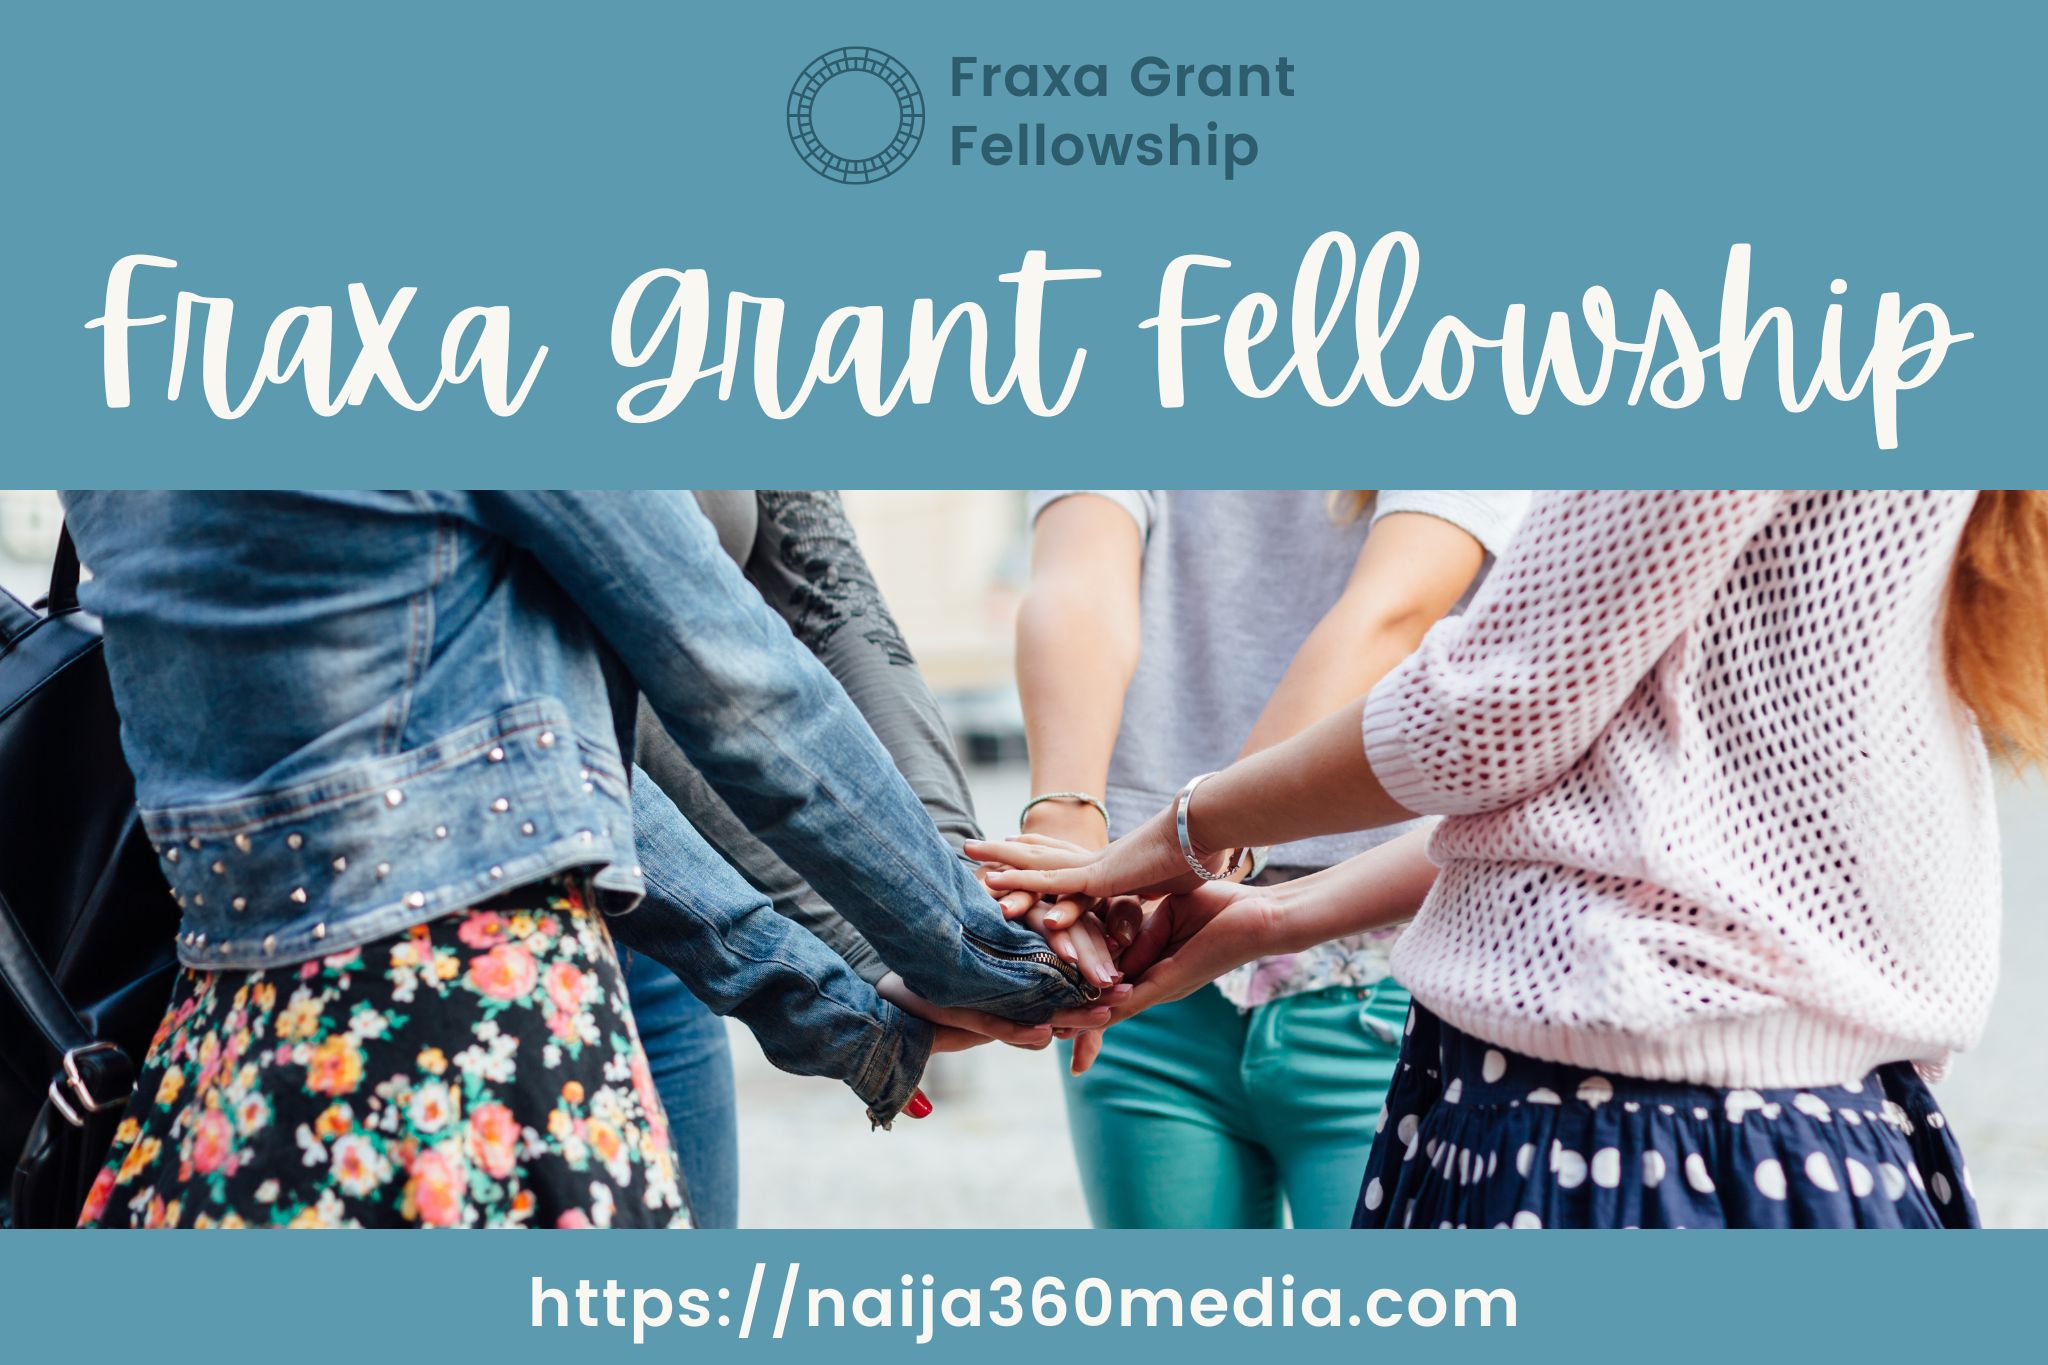 Fraxa Grant Fellowship